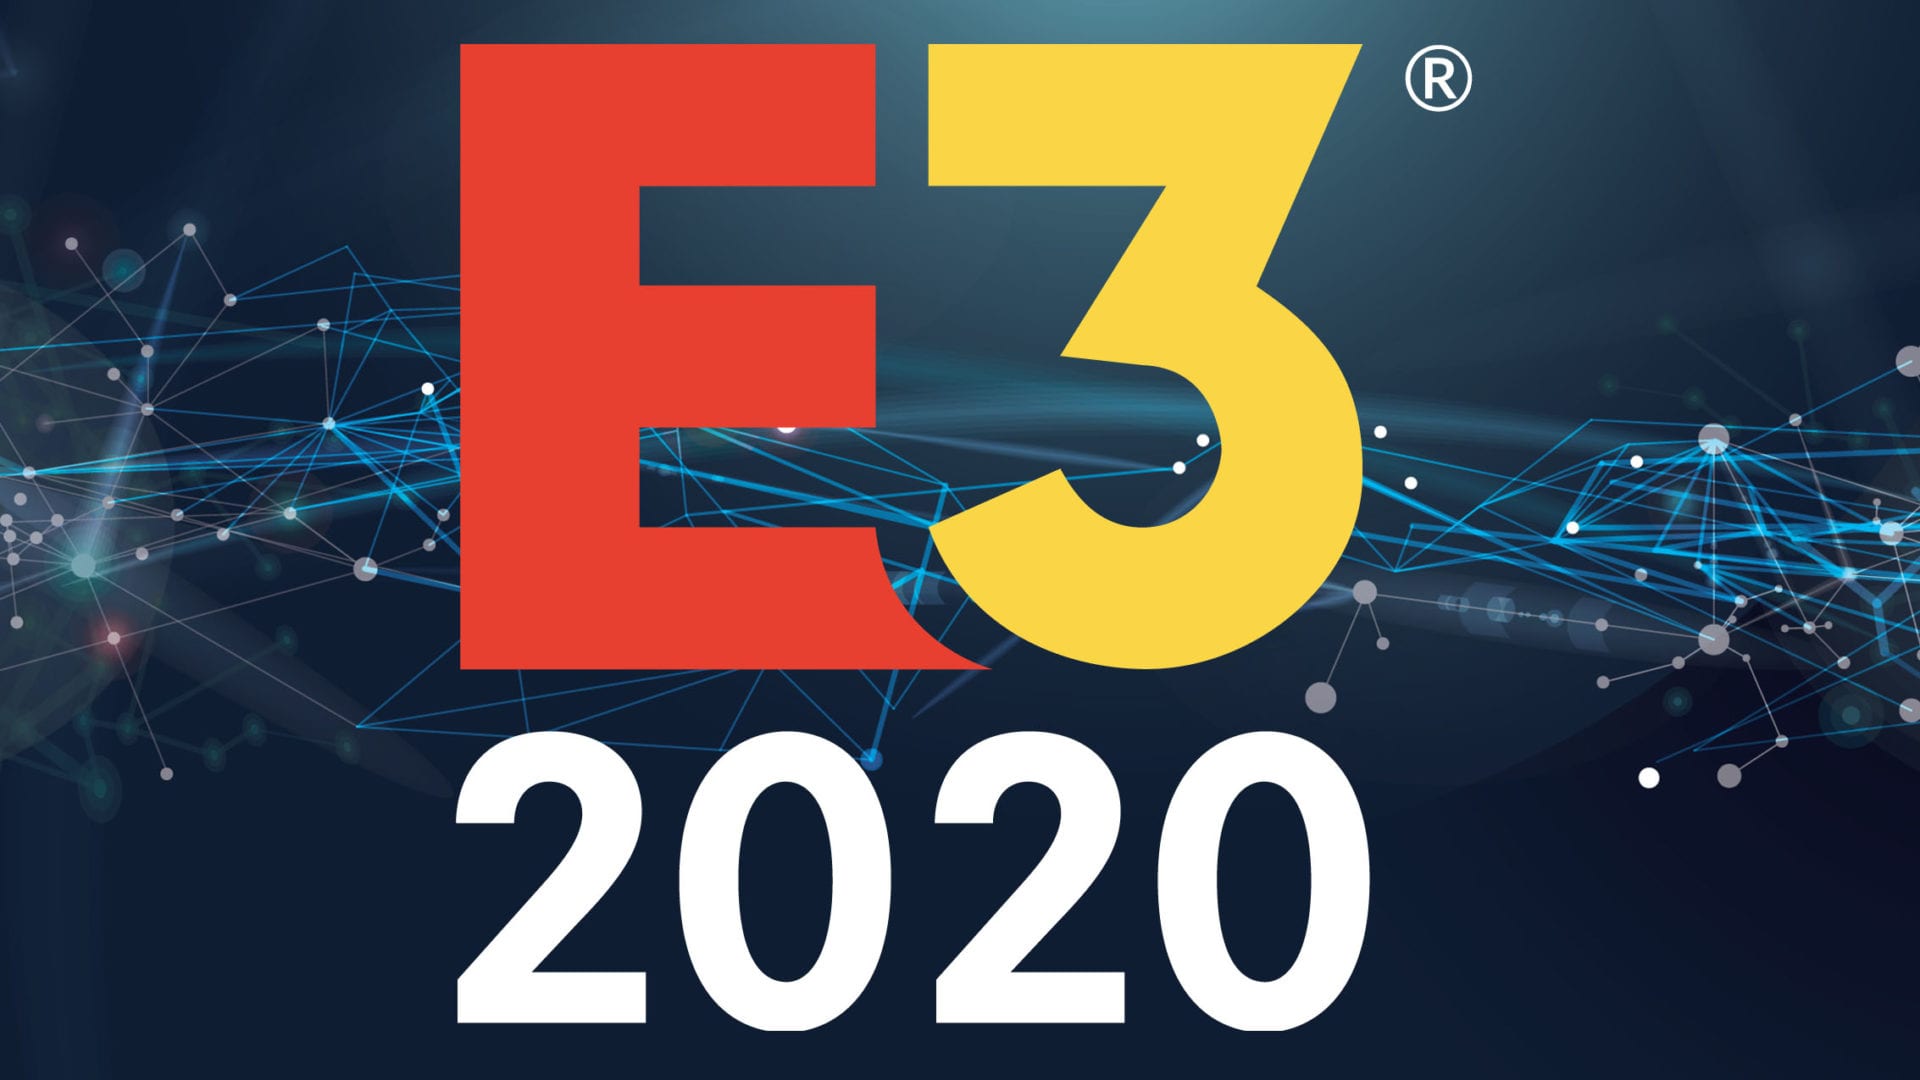 E3 2020 Registration is Now Open